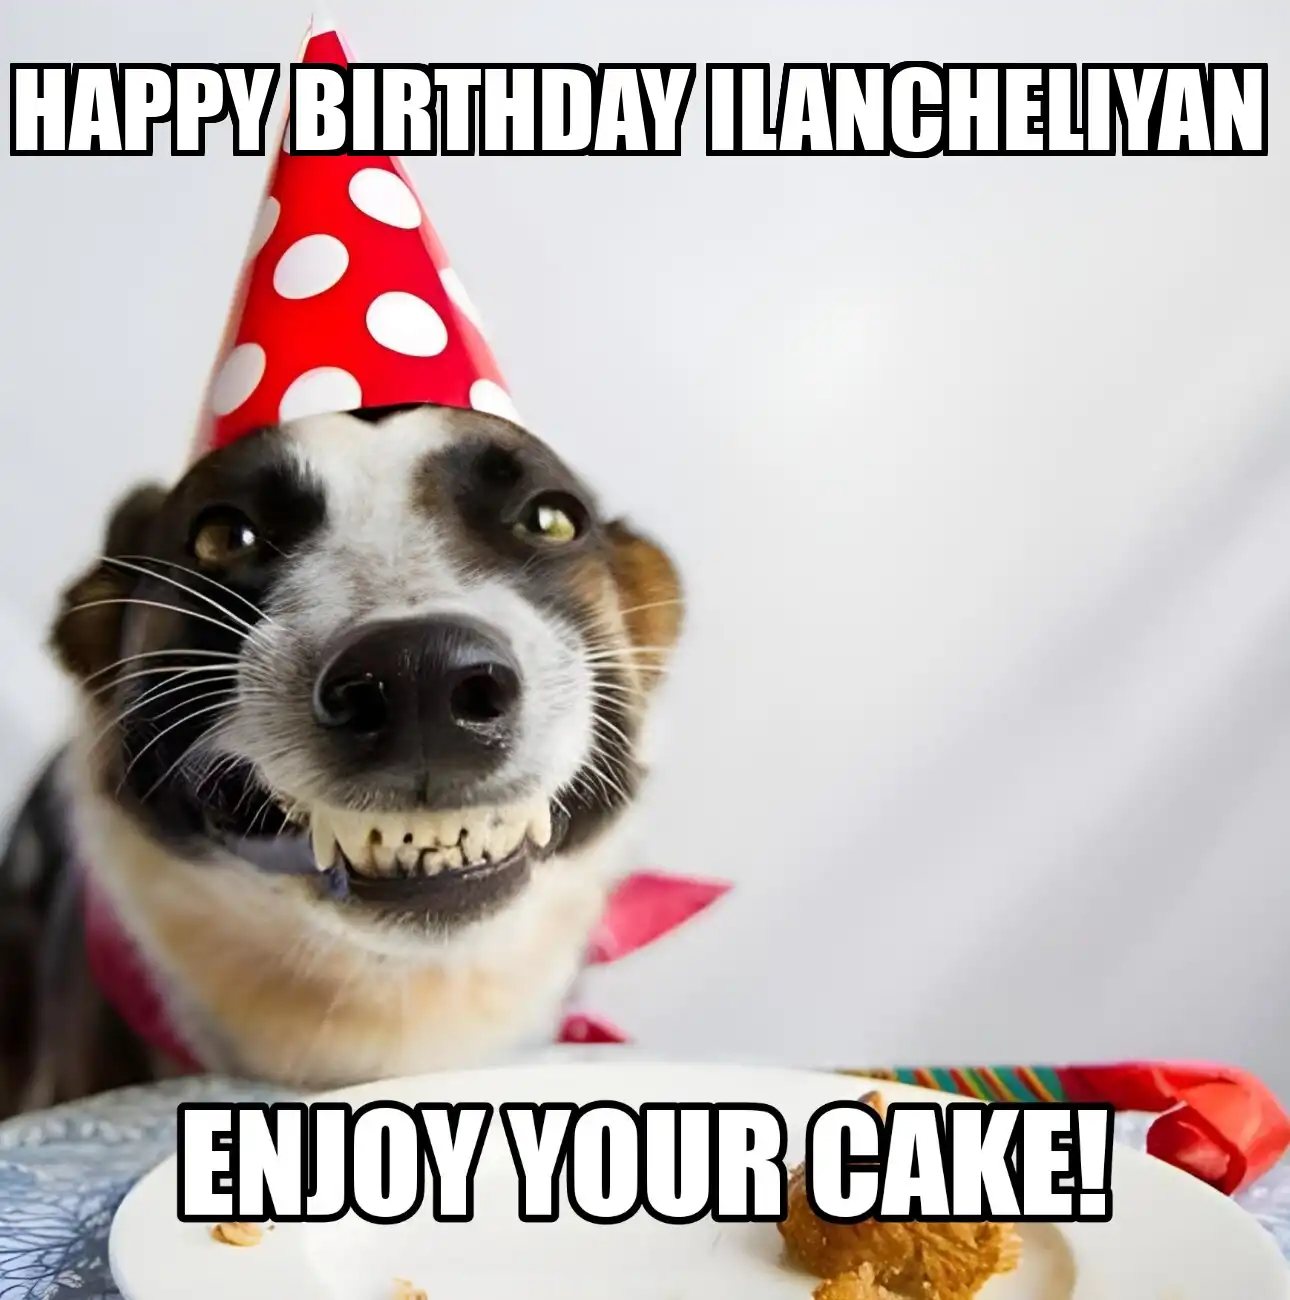 Happy Birthday Ilancheliyan Enjoy Your Cake Dog Meme